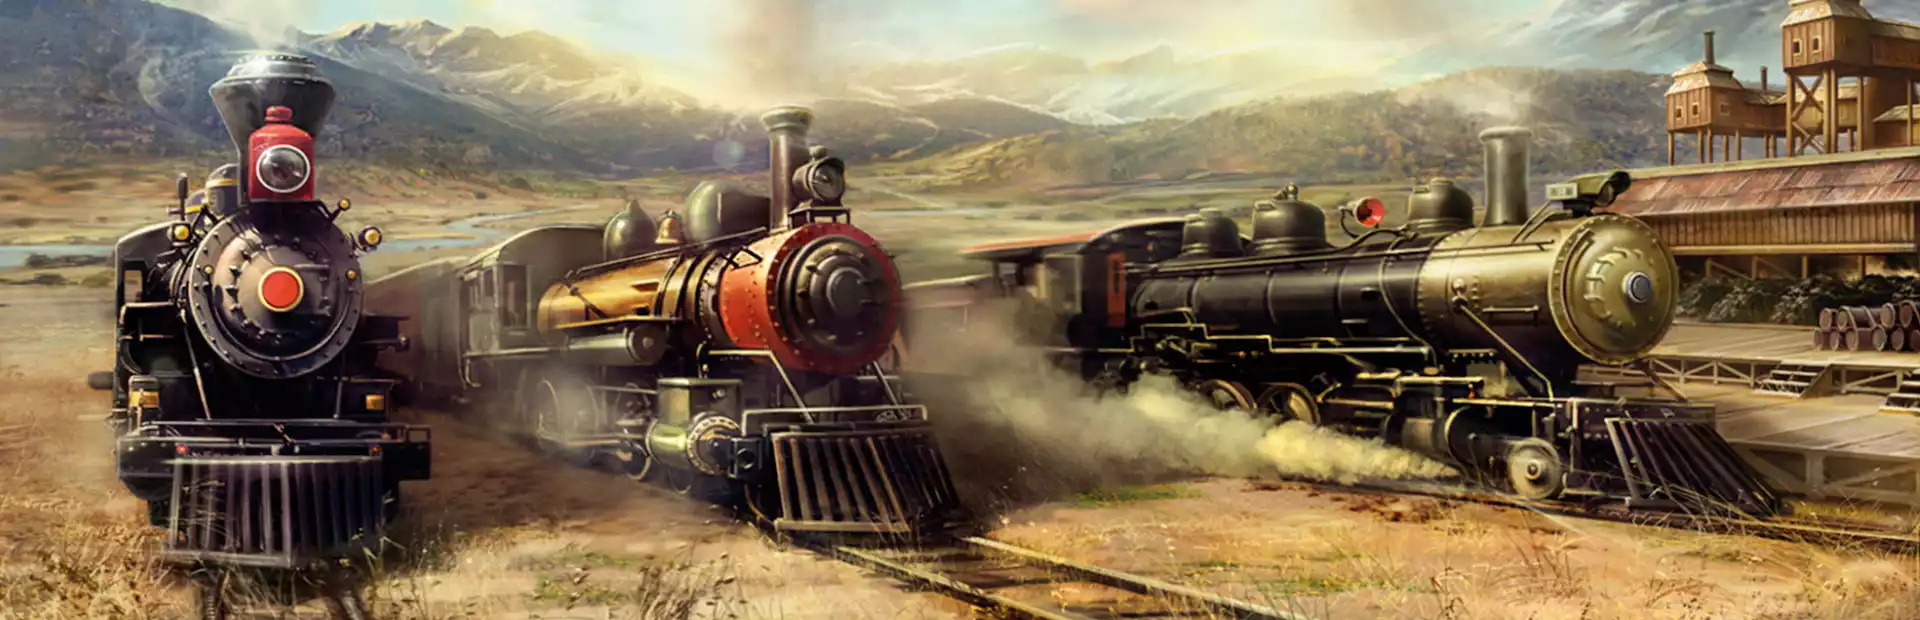 Railroad Corporation Steam Key China